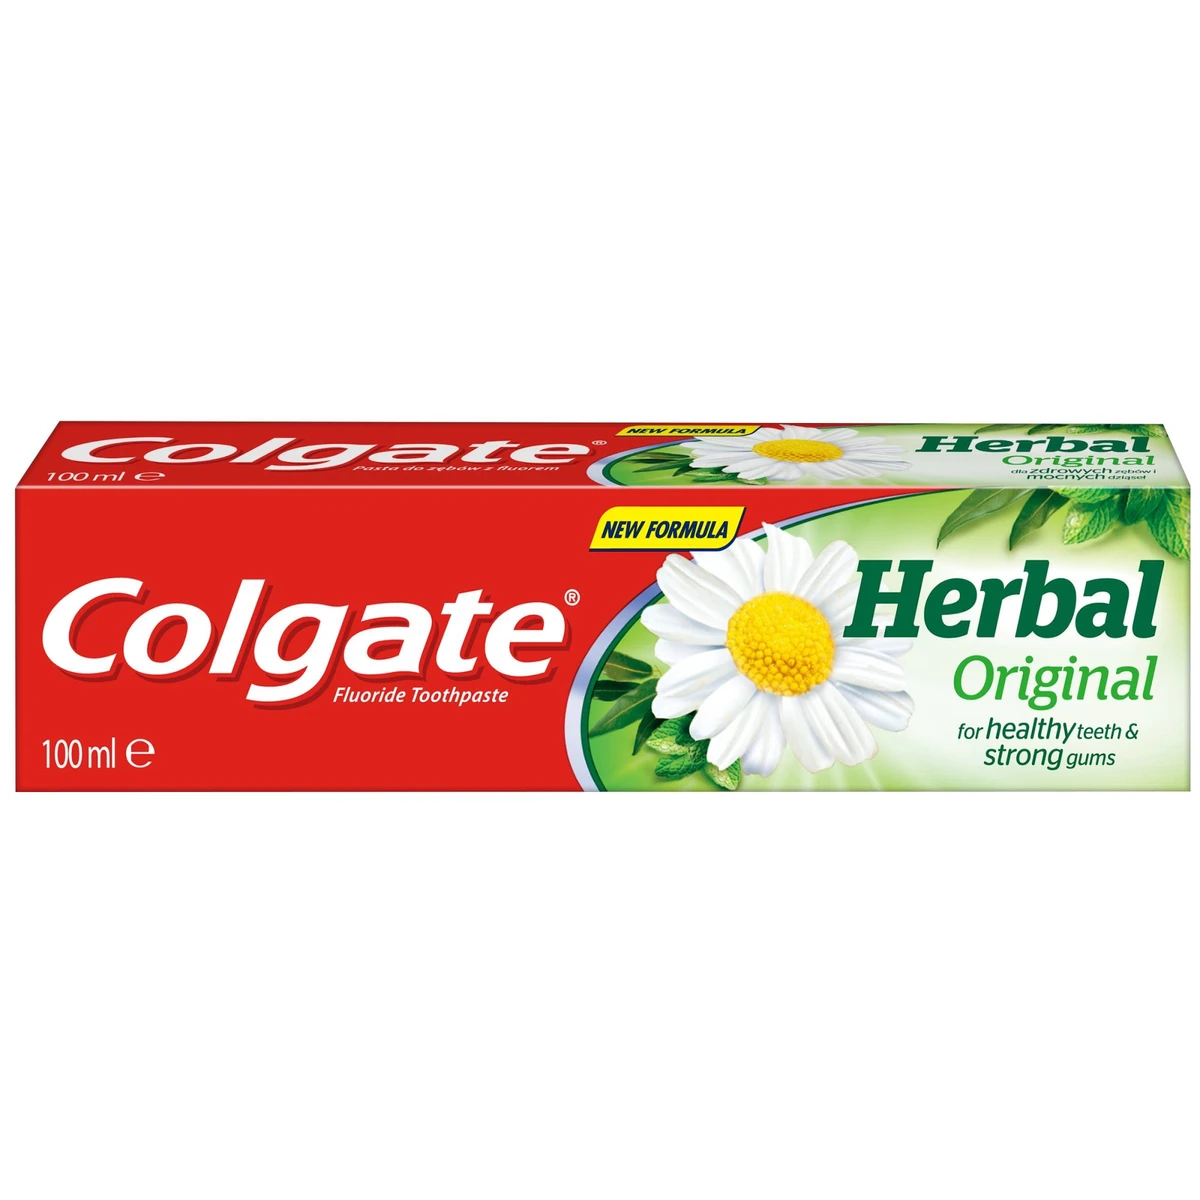 Colgate Herbal Original fogkrém 100 ml